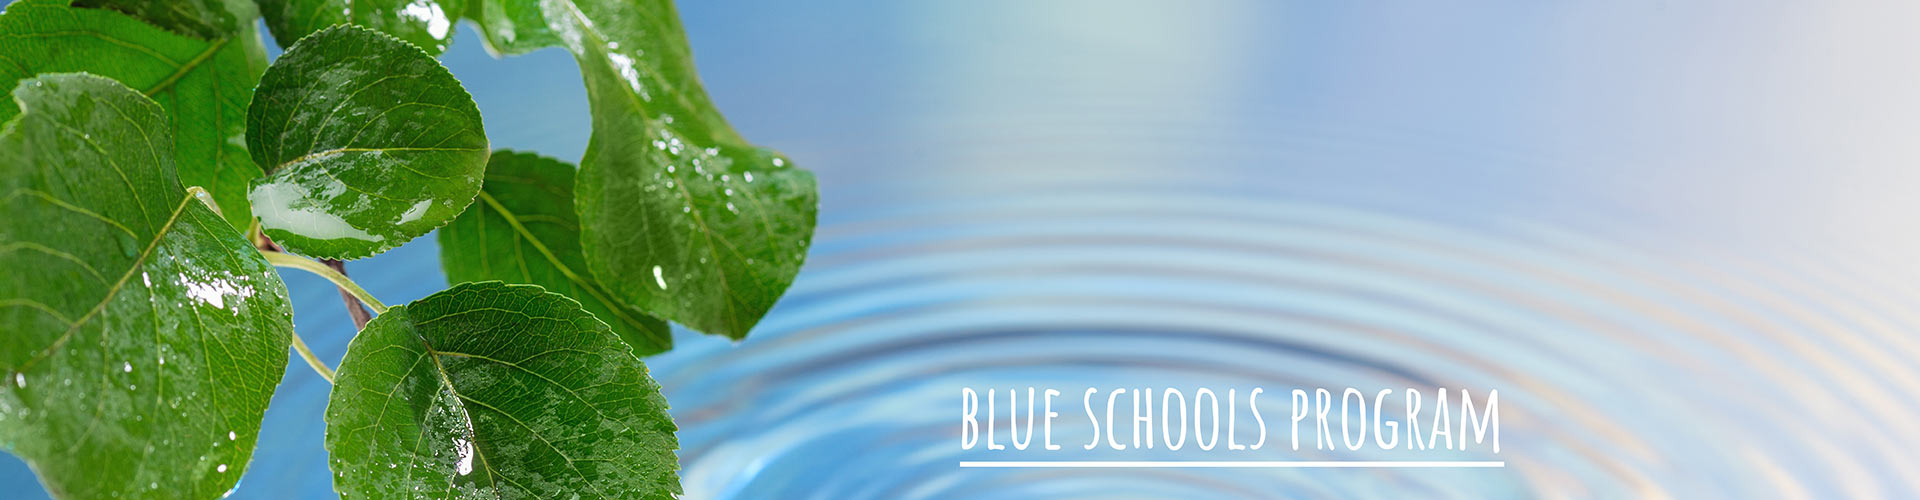 Blue Schools Program